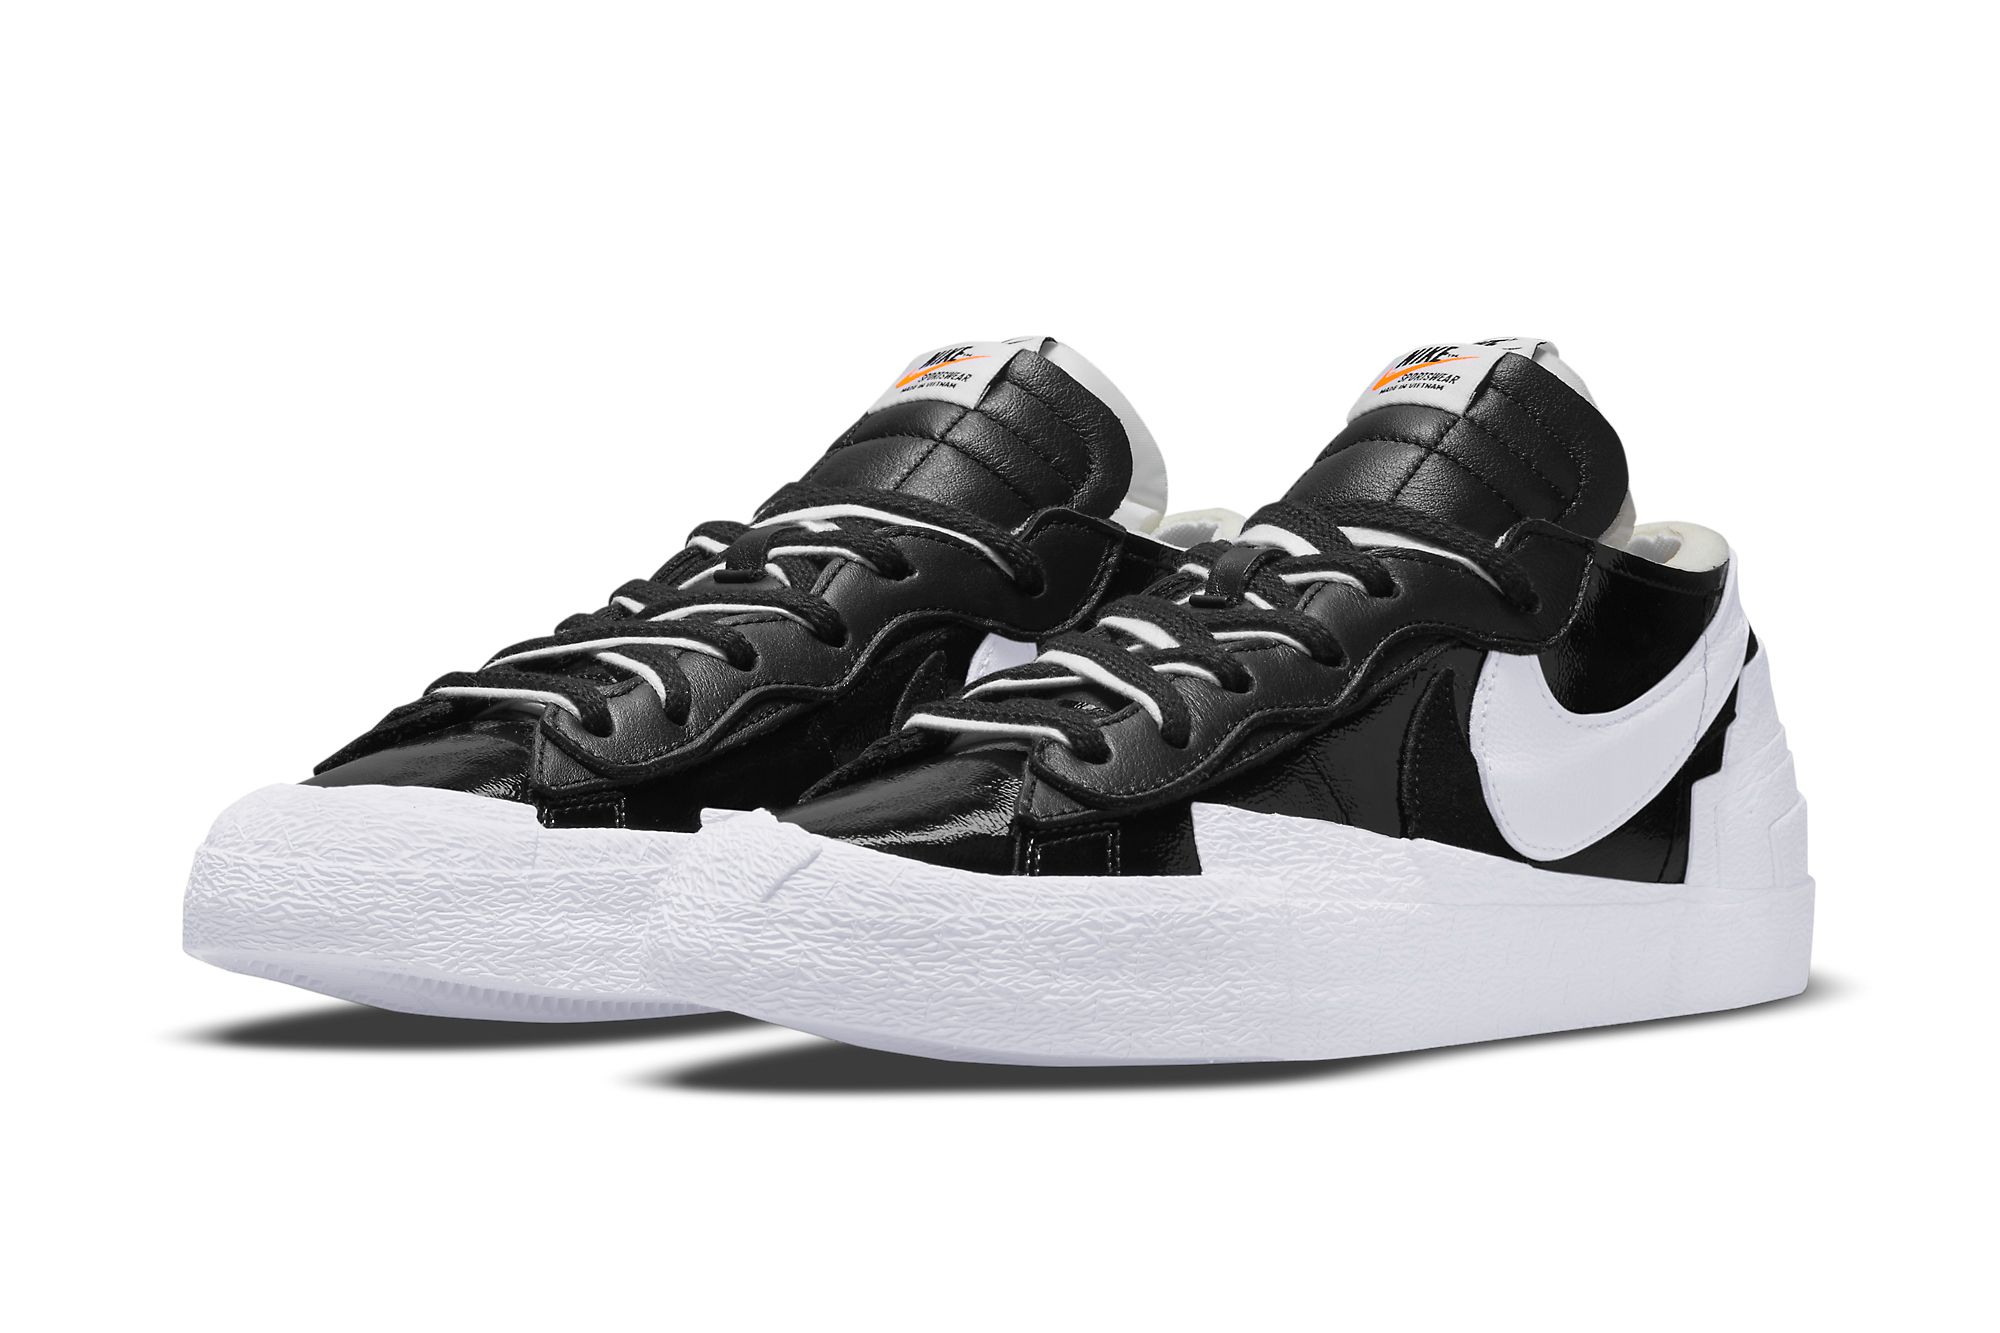 sacai x Nike Blazer Low Black/White